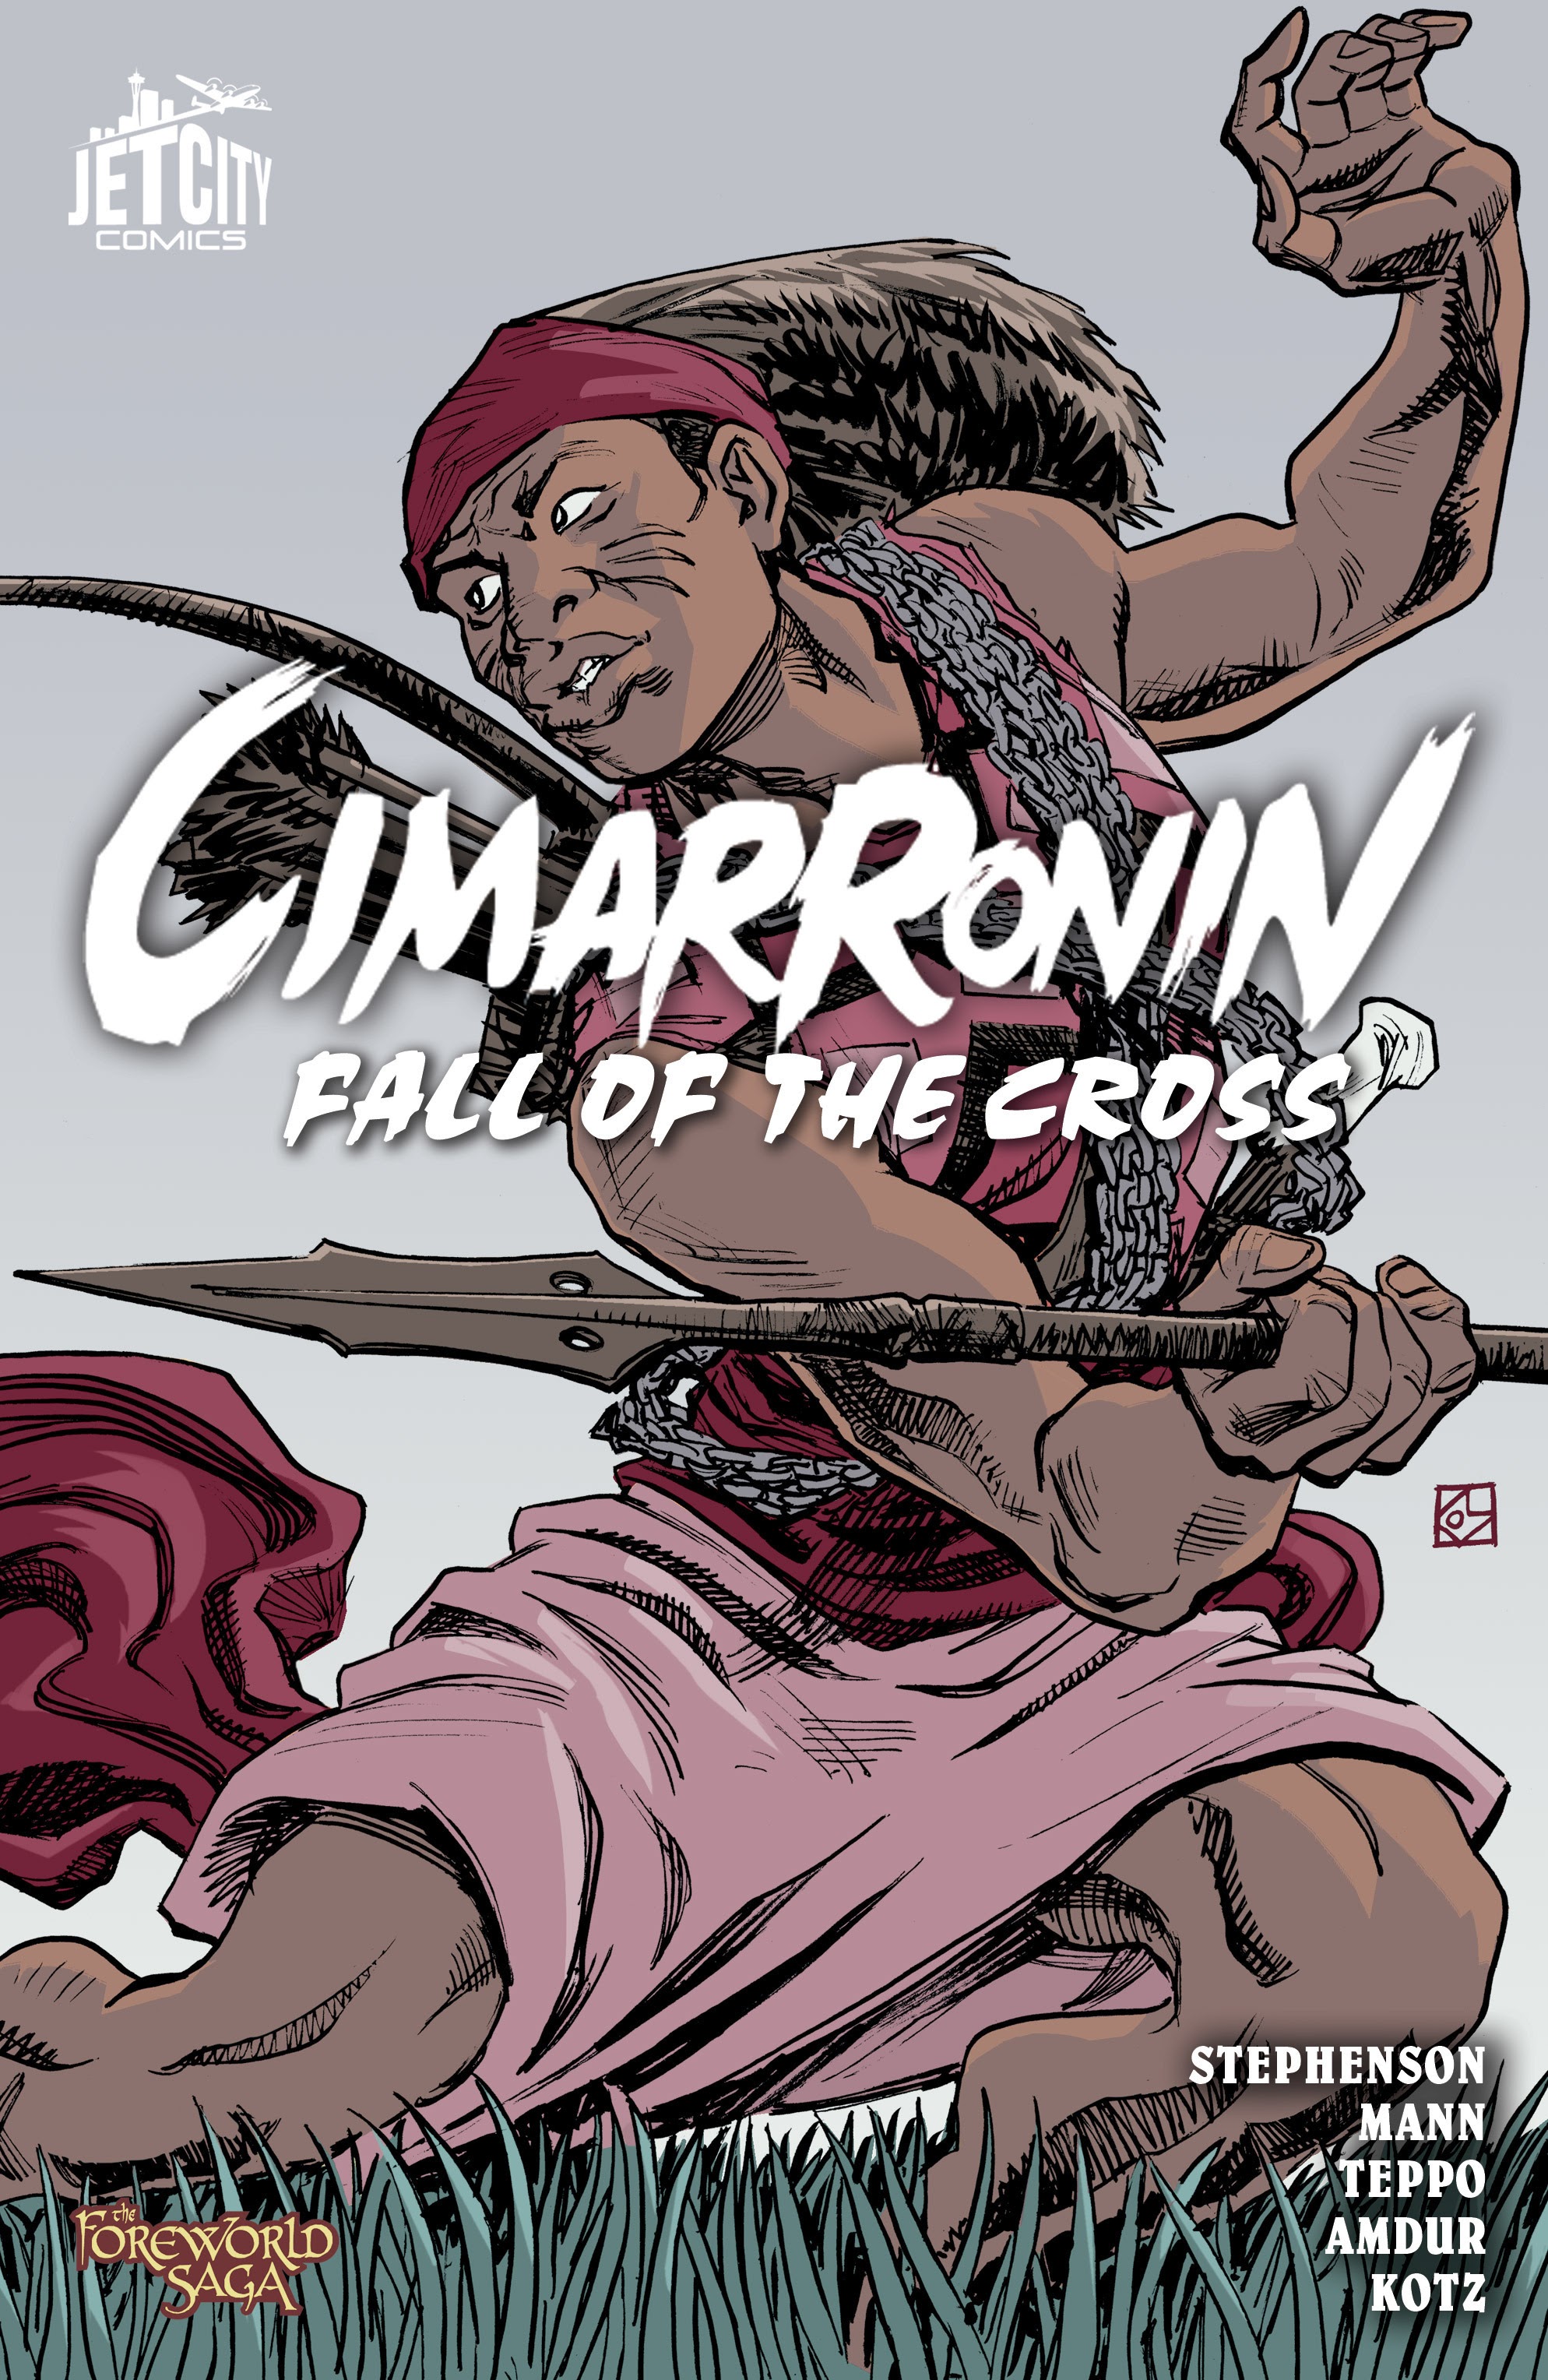 Read online Cimarronin: Fall of the Cross comic -  Issue # TPB - 1